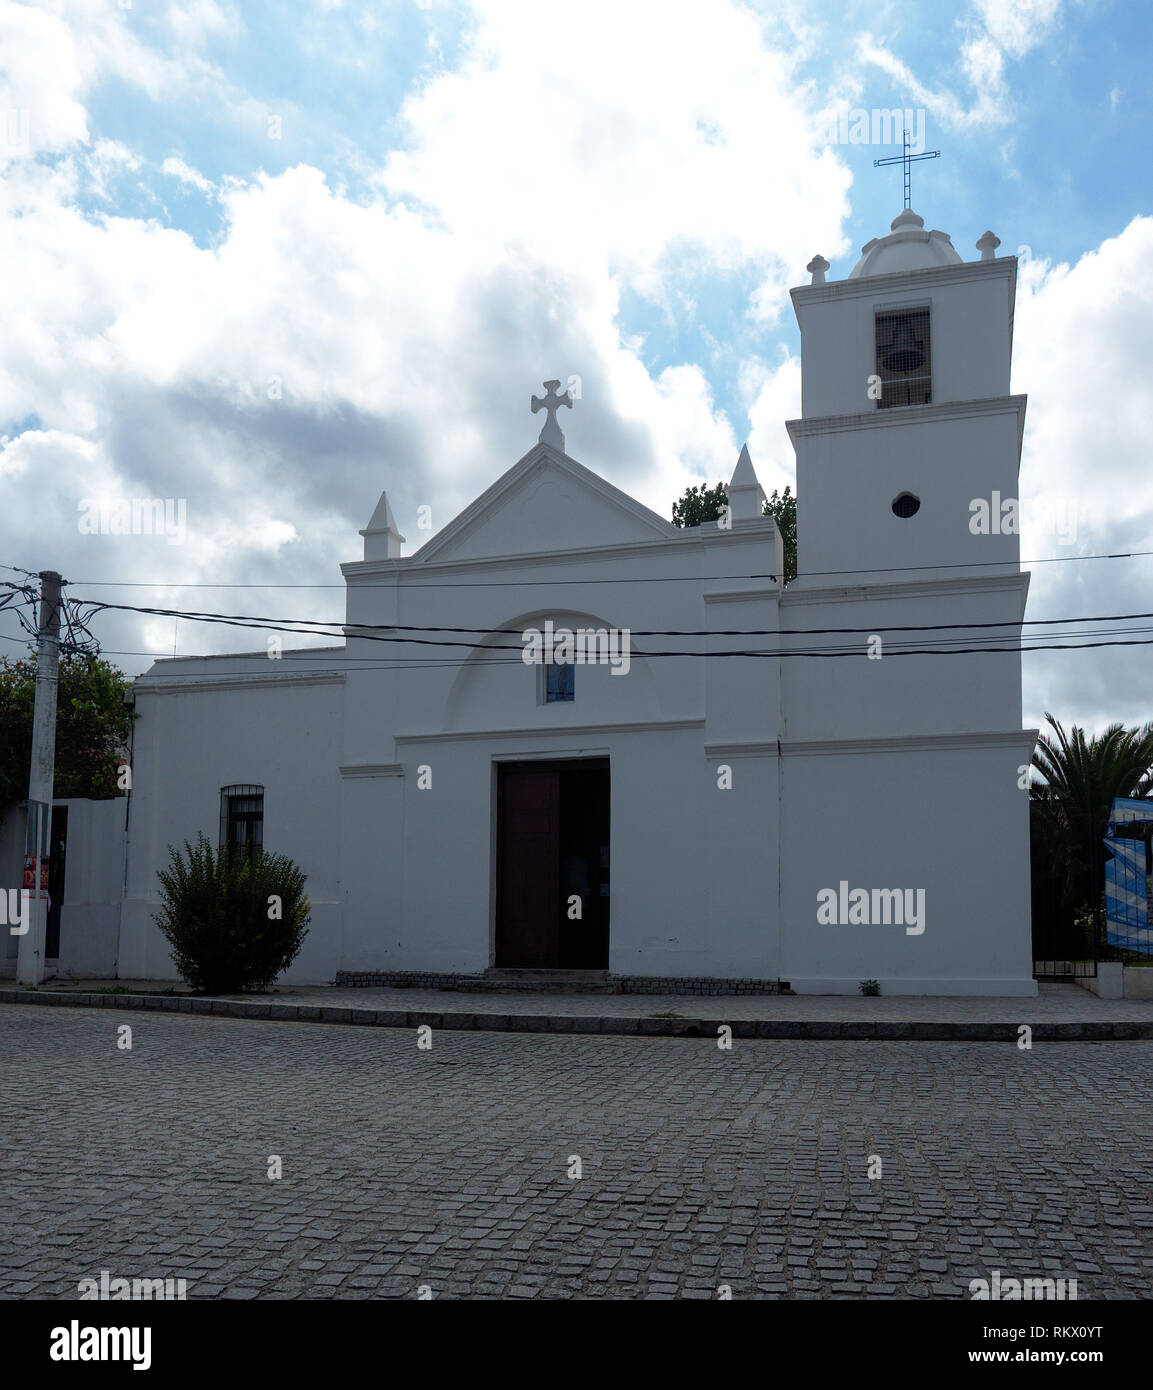 Merlo, San Luis, Argentina - 2019: Exterior view of Parroquia Nuestra Señora del Rosario church, located at the city center. Stock Photo